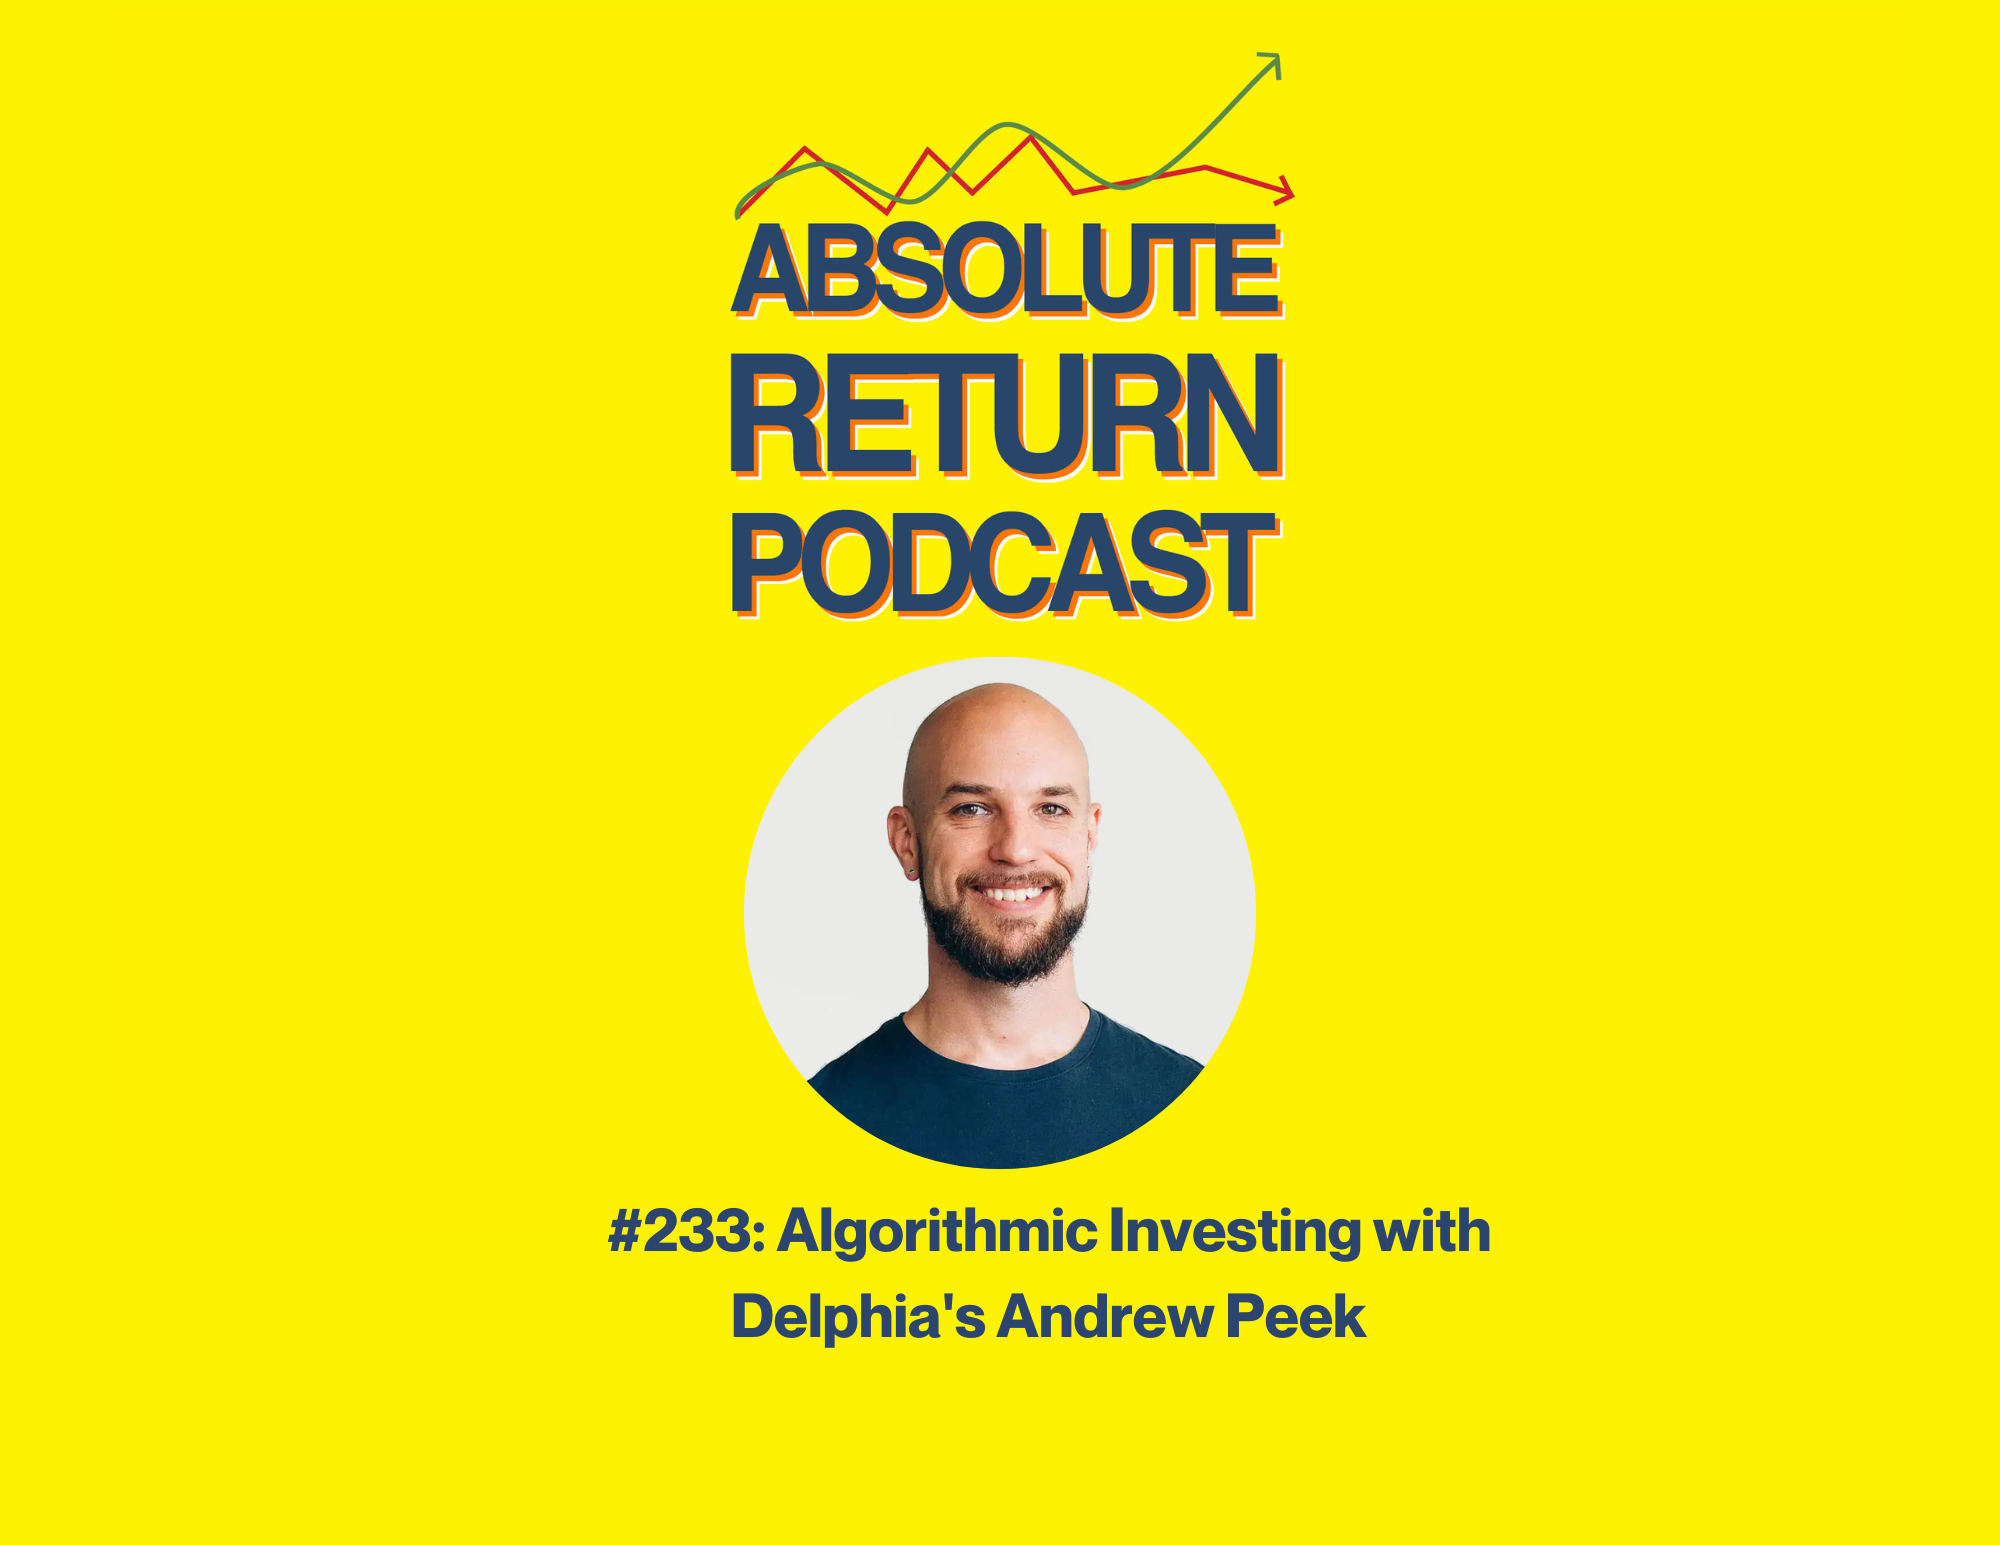 Absolute Return Podcast #233: Algorithmic Investing with Delphia’s Andrew Peek